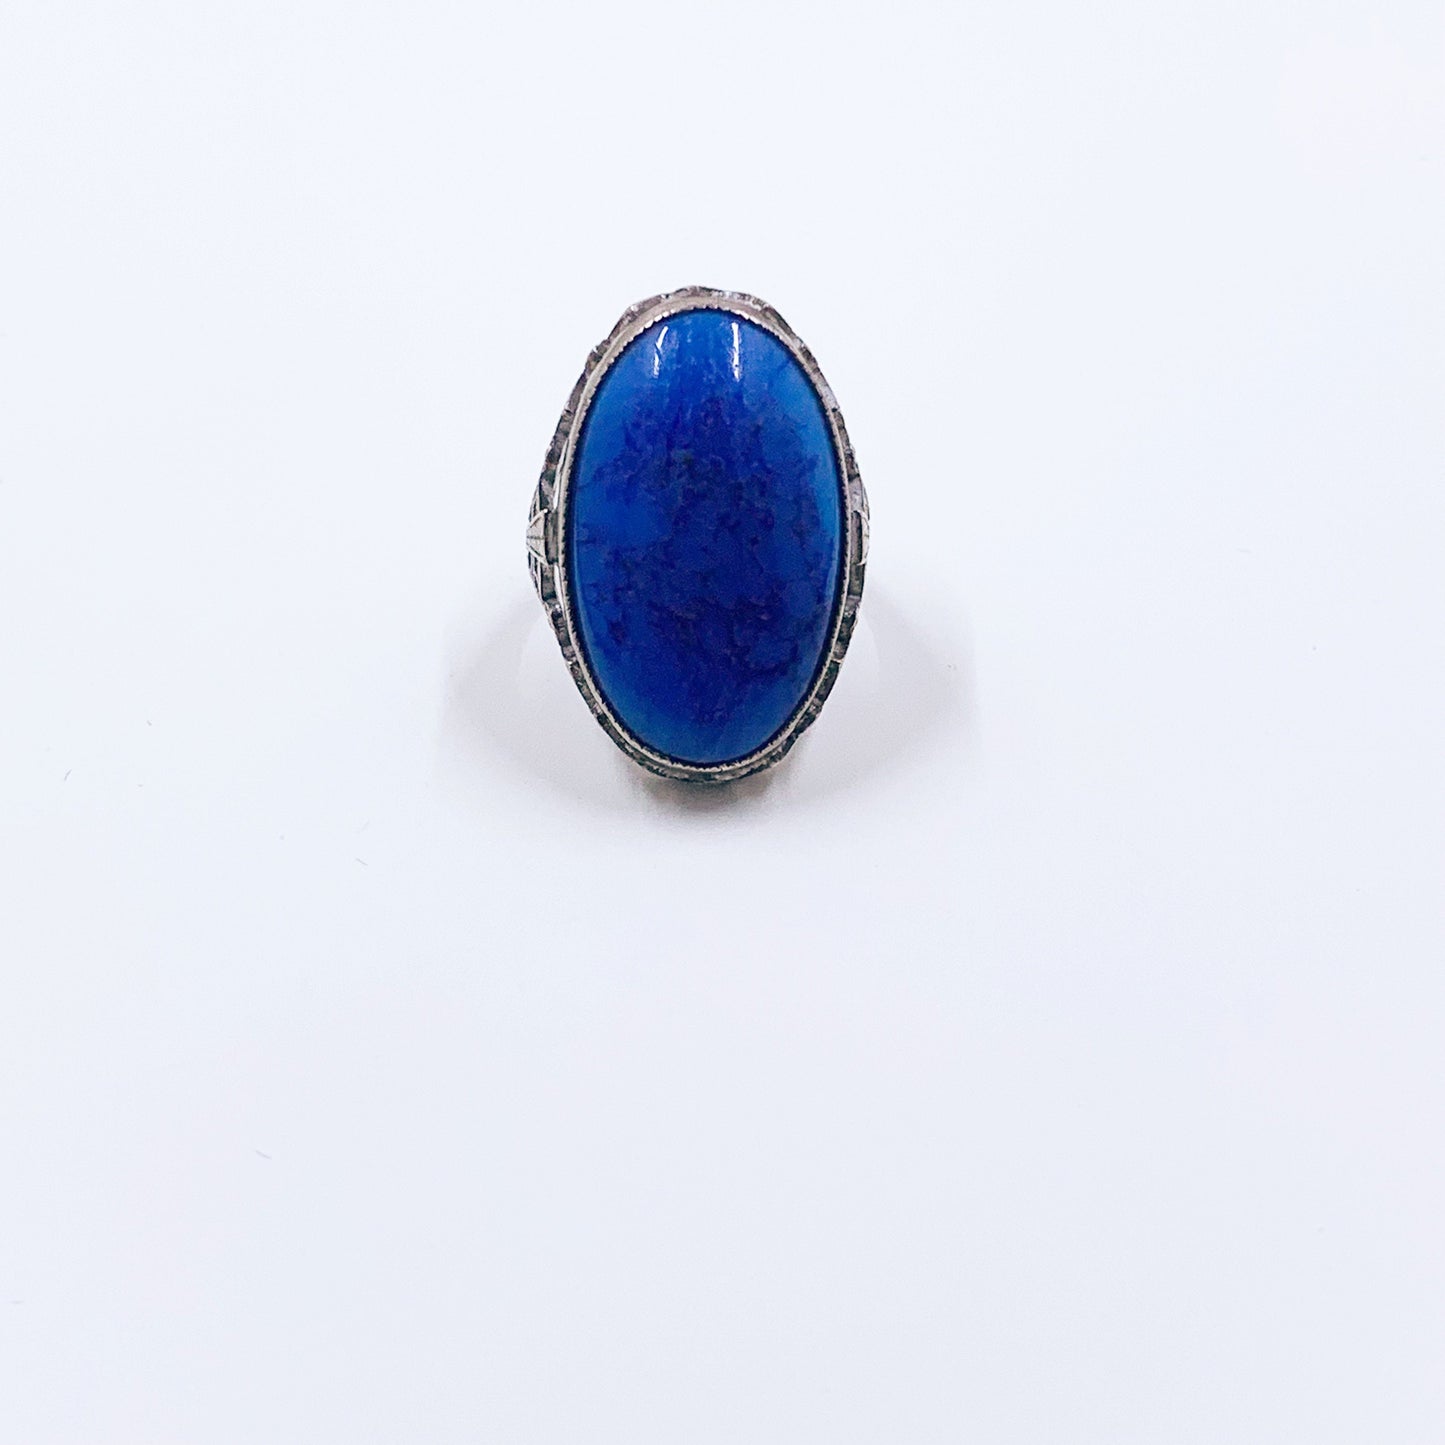 Antique Art Deco Blue Glass Stone Filigree Ring | Art Deco Filigree Sterling Silver Ring | Size 4 1/2 Ring